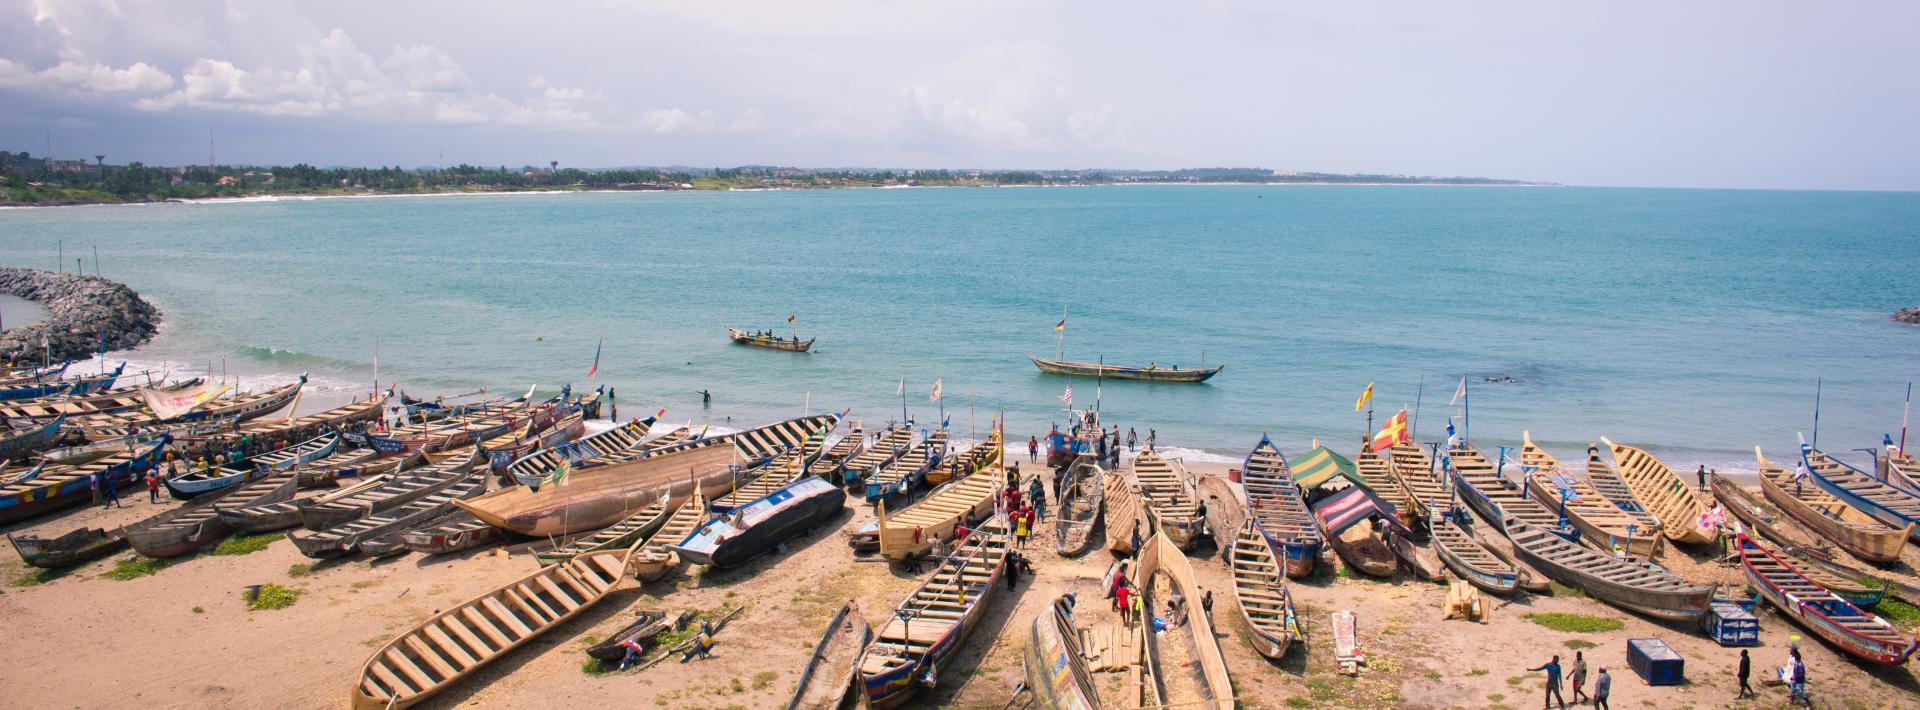 fishing boats on the coast in Cape Coast, Ghana